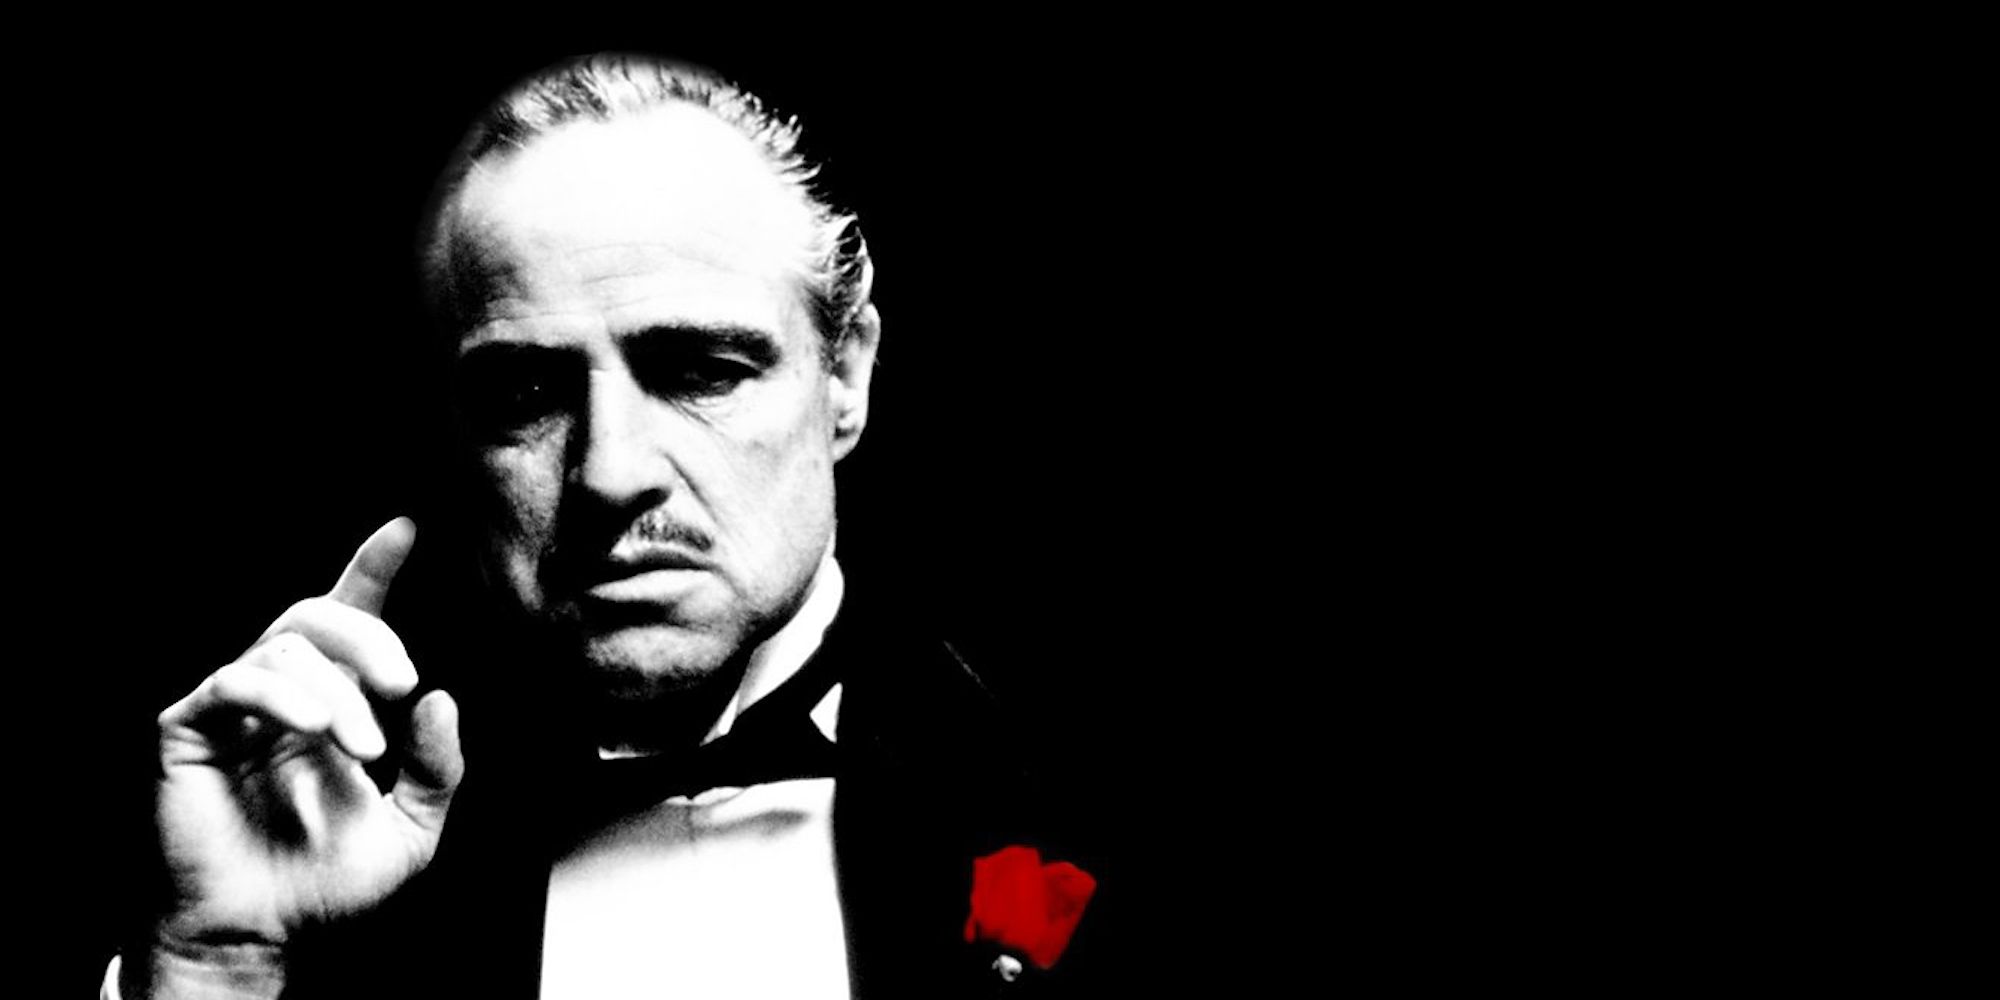 Godfather s. The Godfather. Вито Корлеоне. Дон Корлеоне с сигарой. Марлон Брандо крестный отец Мем.